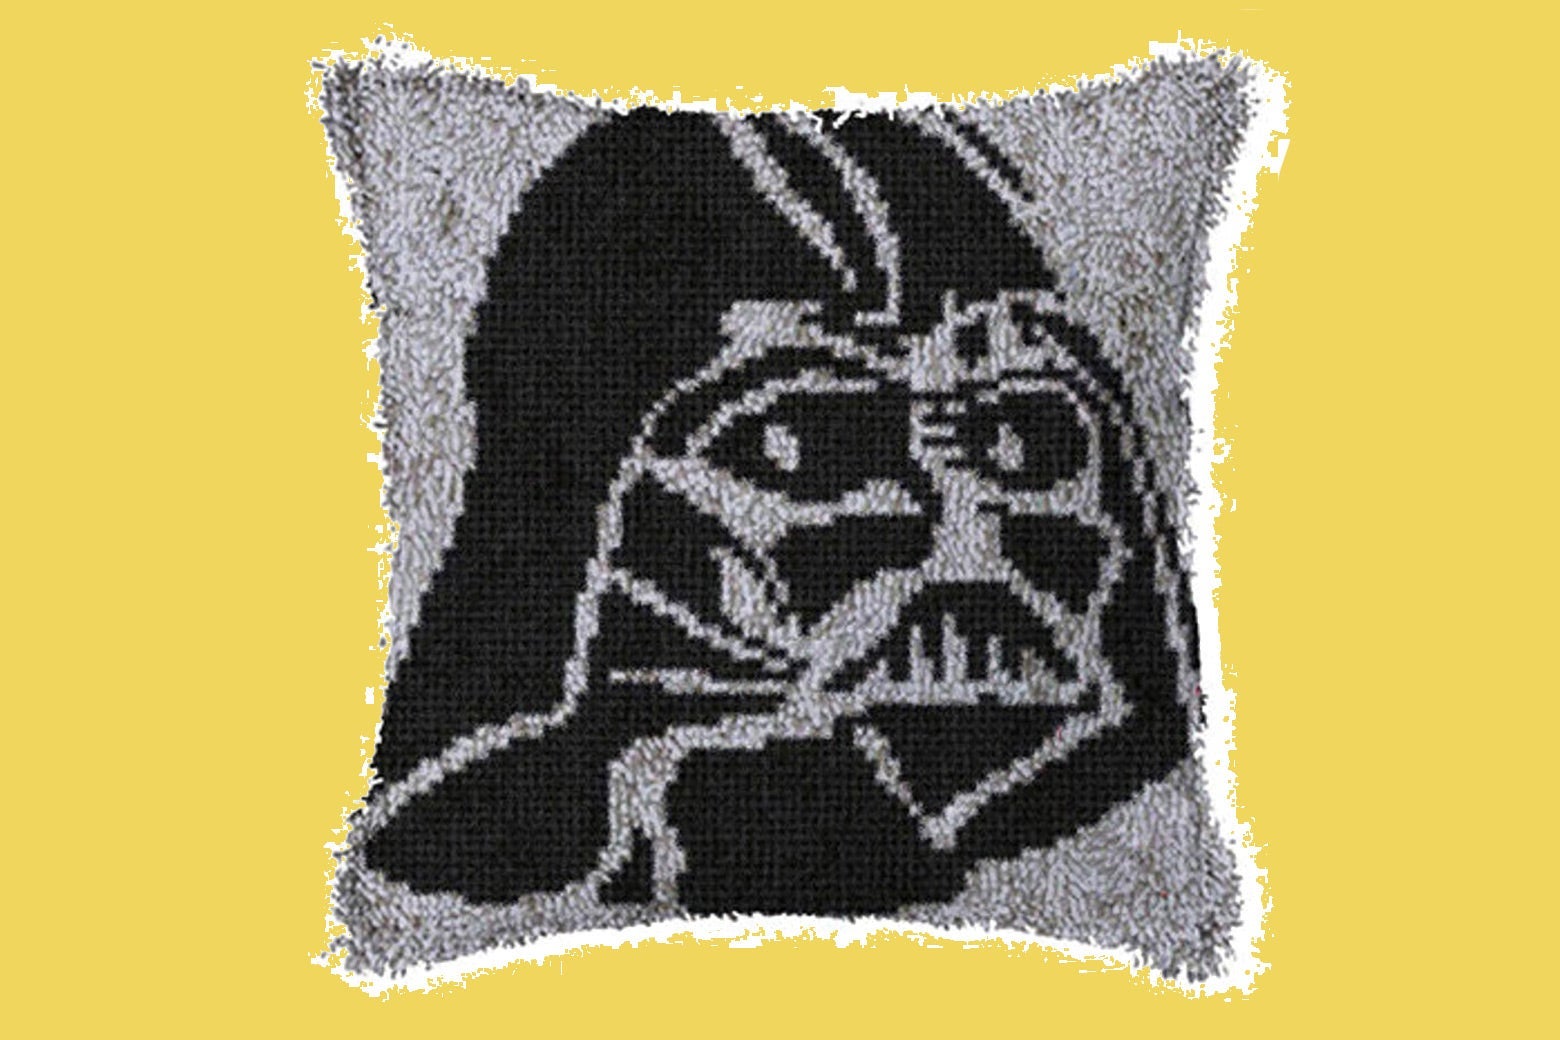 A Darth Vader design on a pillow.